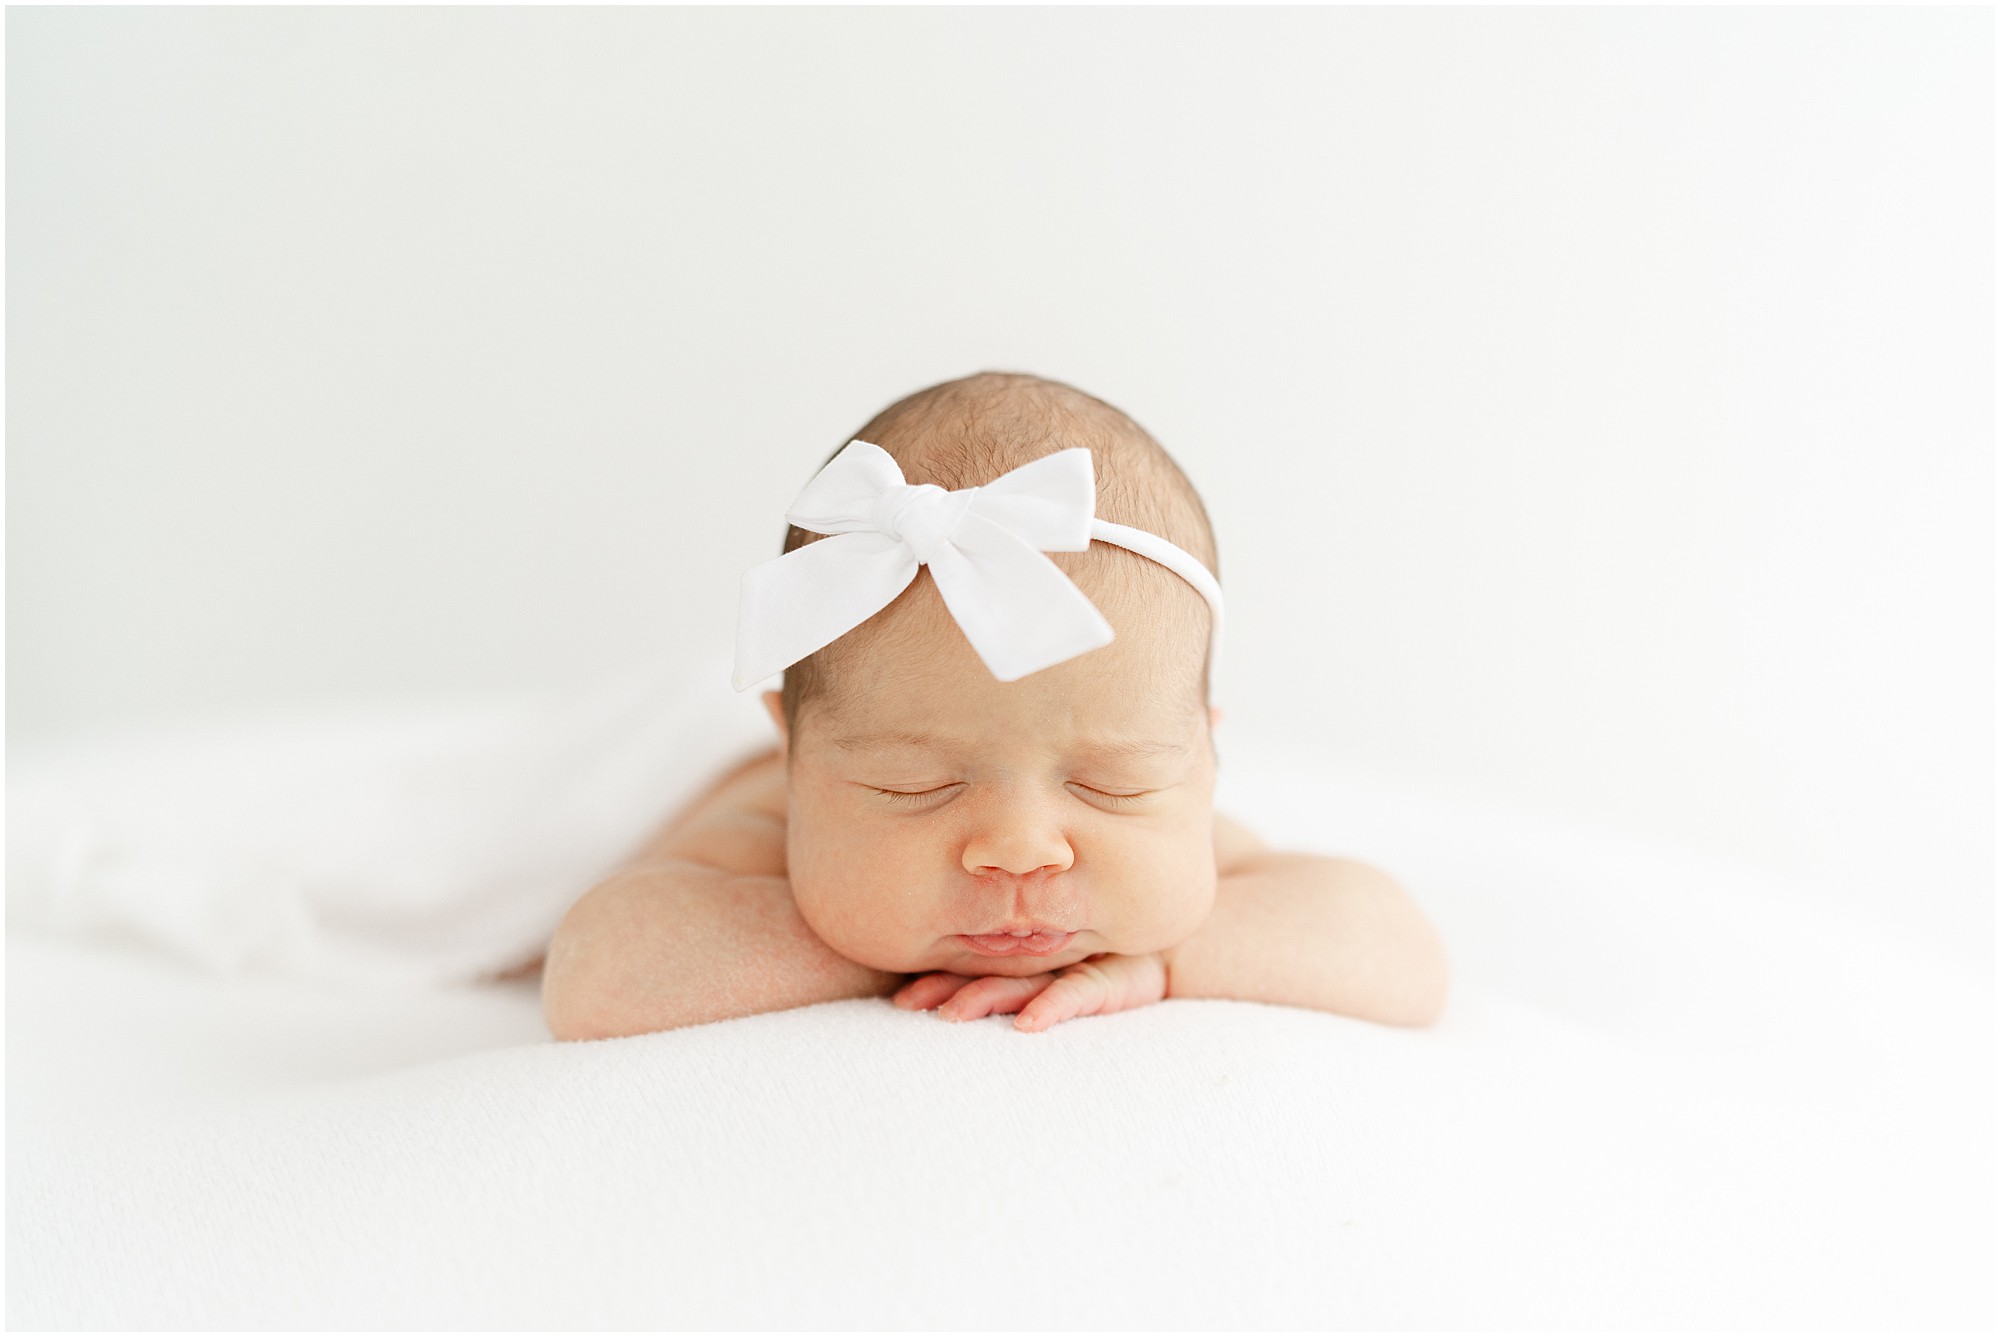 Atlanta studio newborn photography images of a newborn baby girl with a white headband.